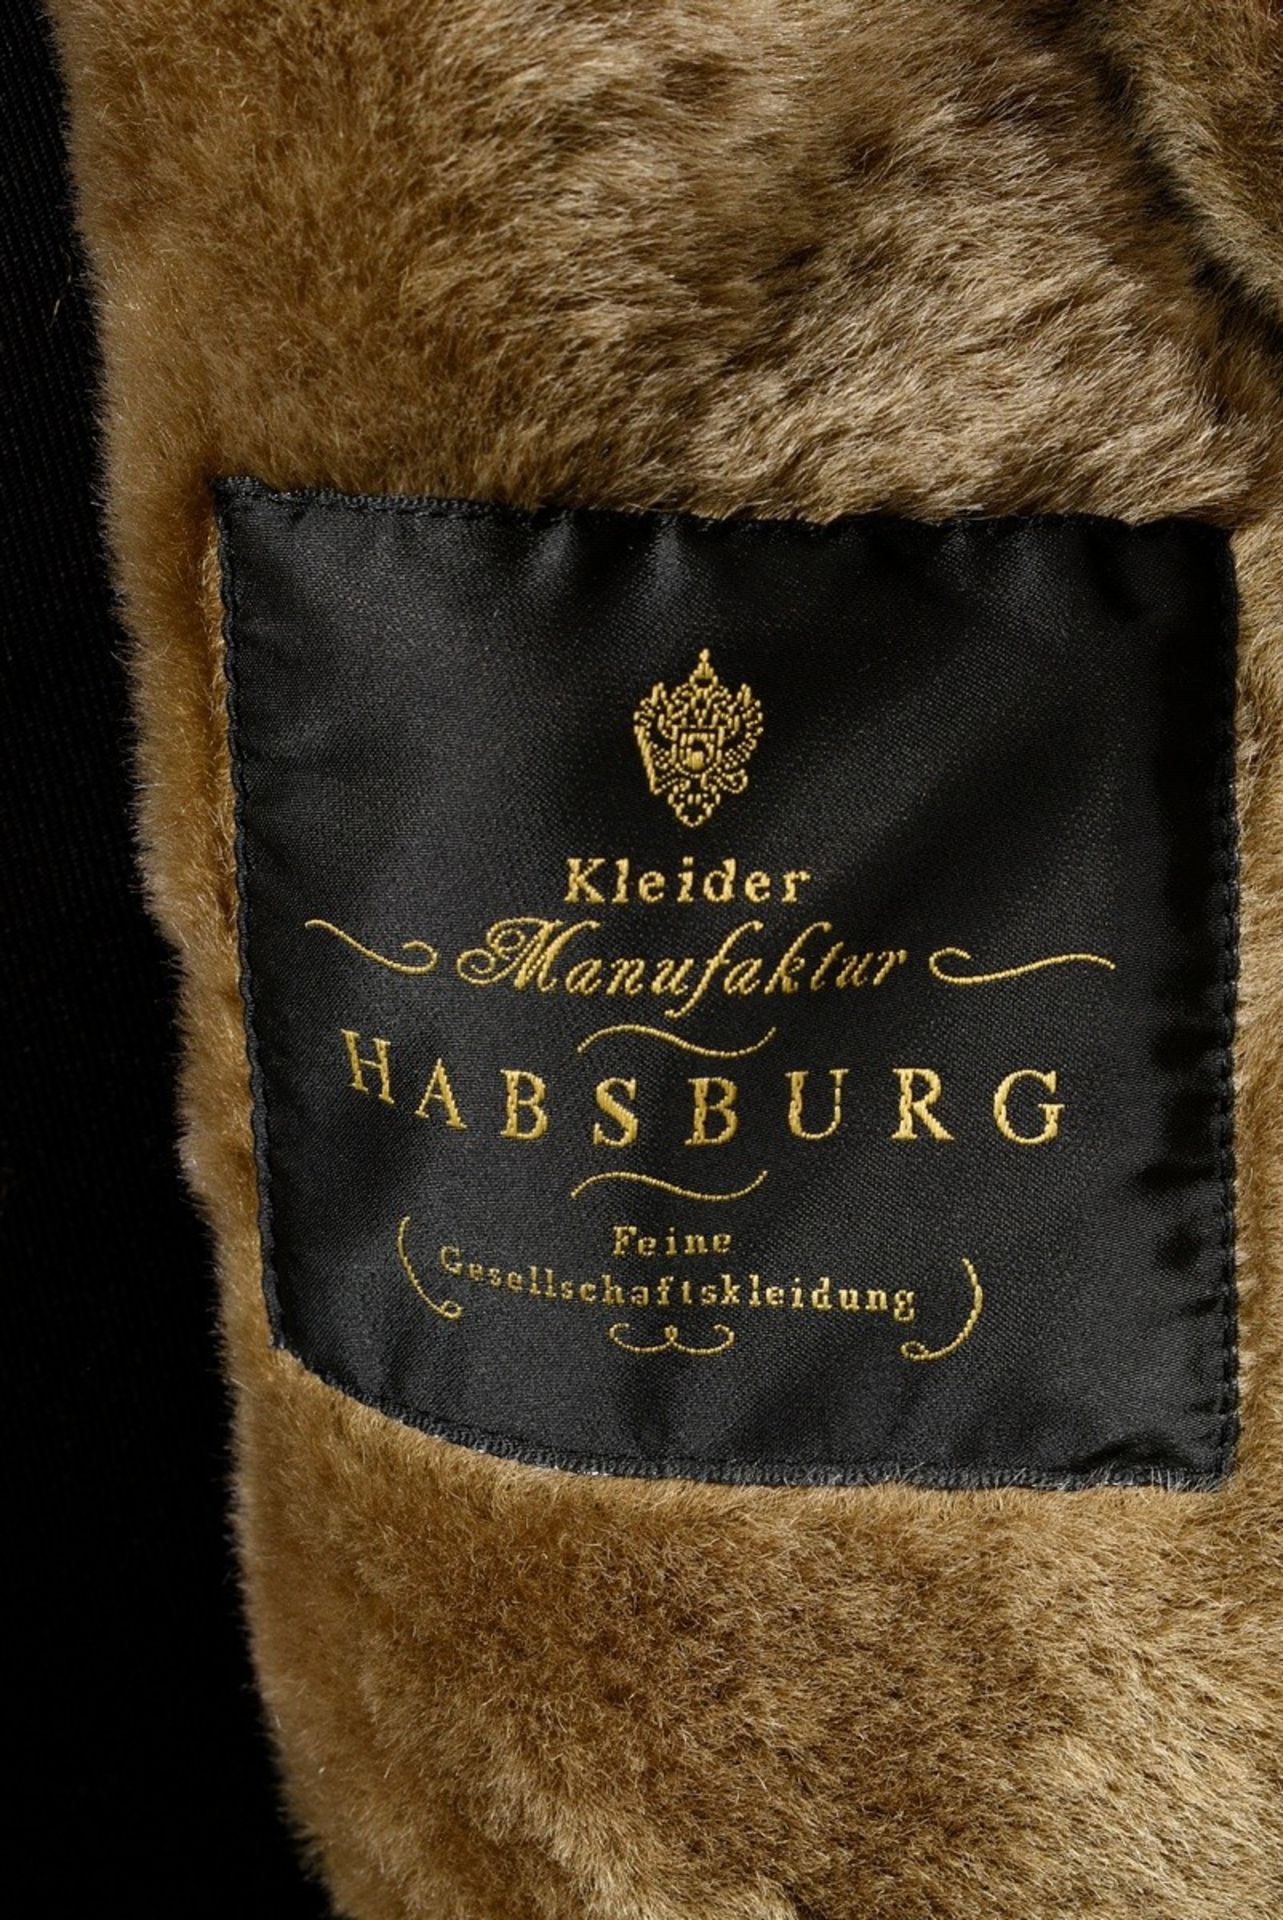 Habsburg Shearling Herren Kurzmantel, Lammfell natur mit Antikfinish, Manufaktur Habsburg, Modell B - Bild 6 aus 6